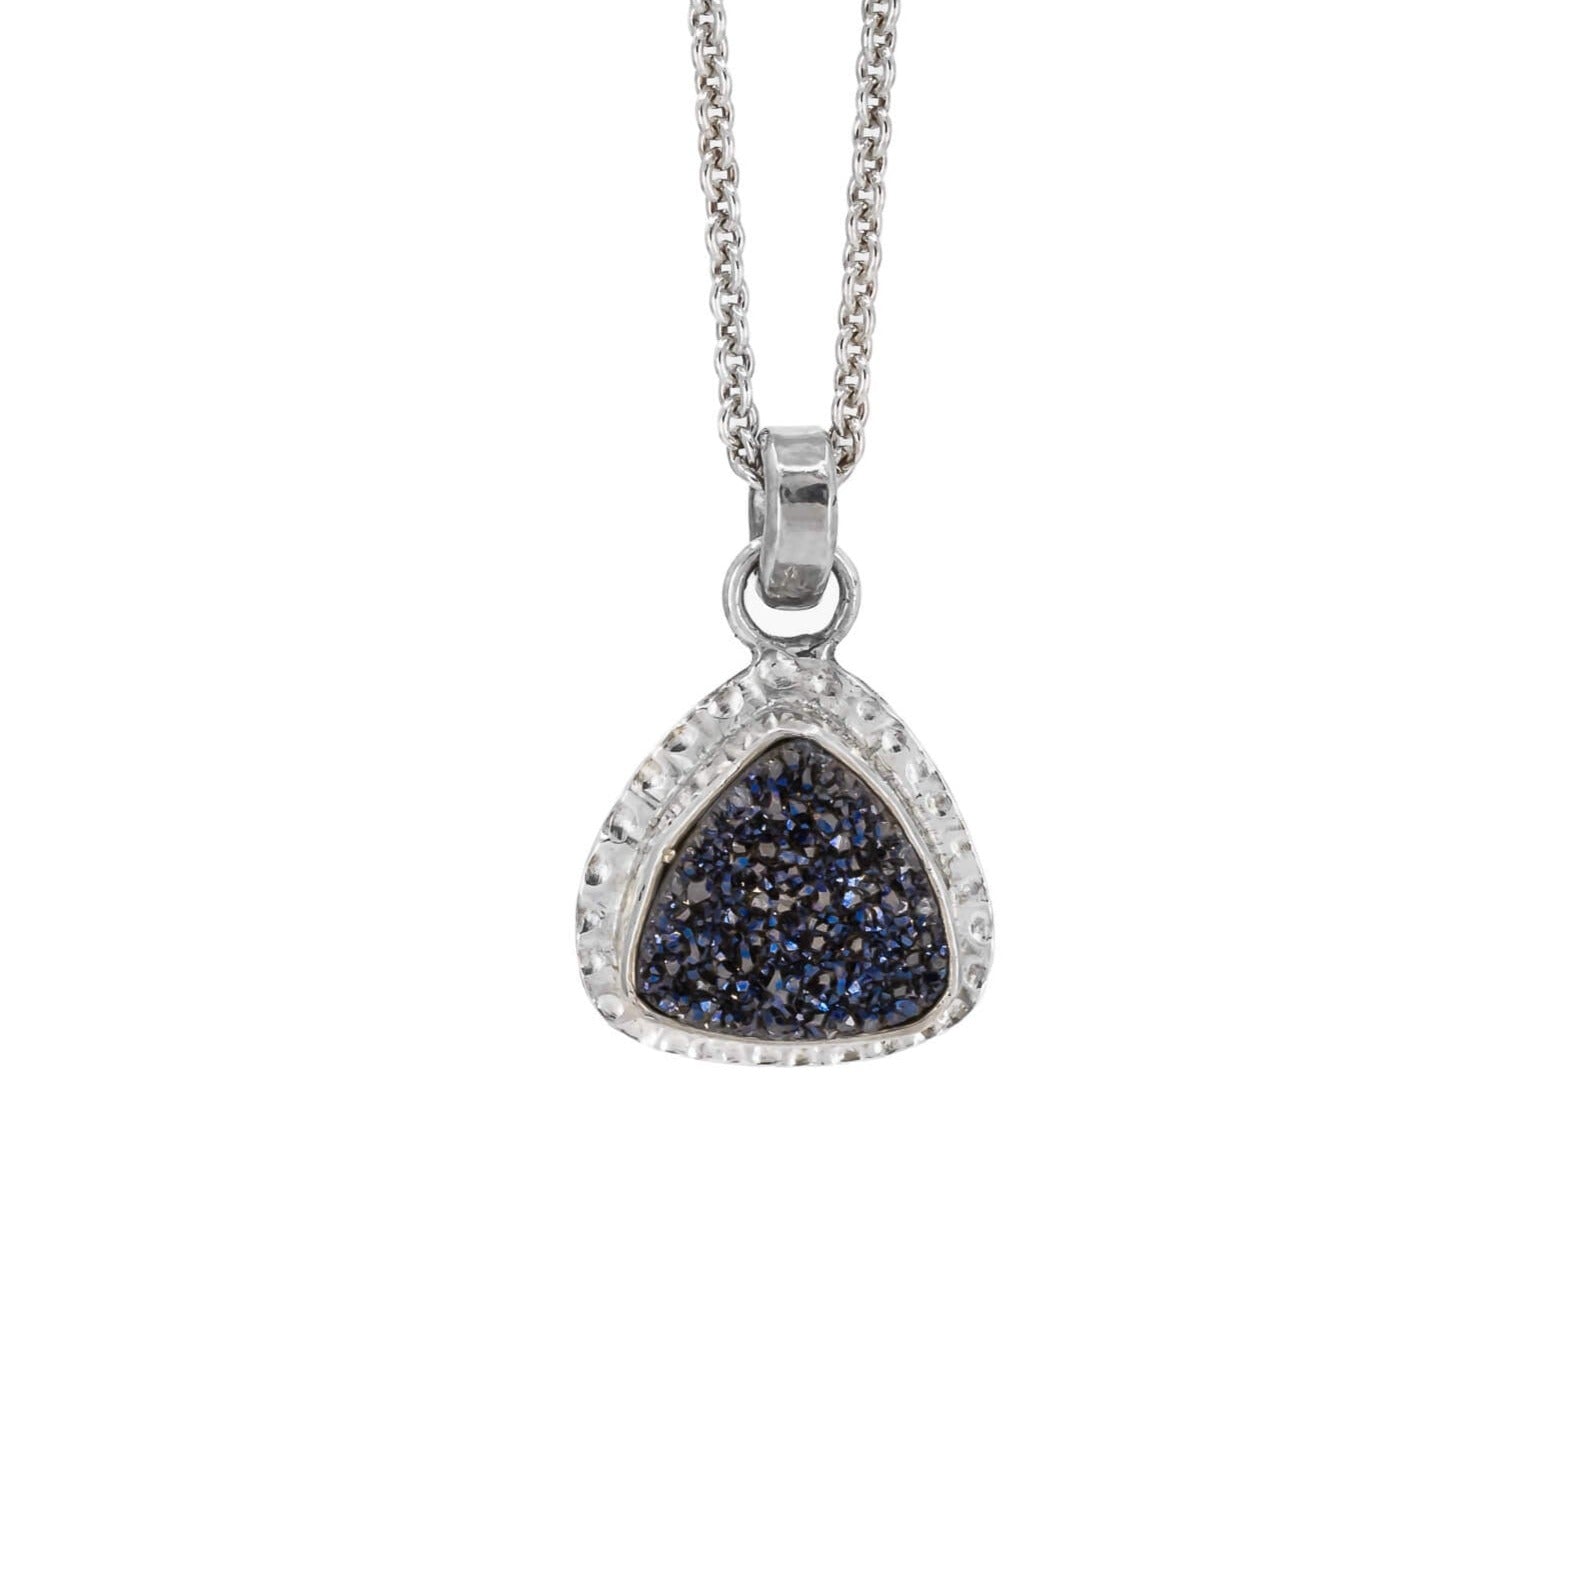 Dark blue druzy pendant necklace in sterling silver